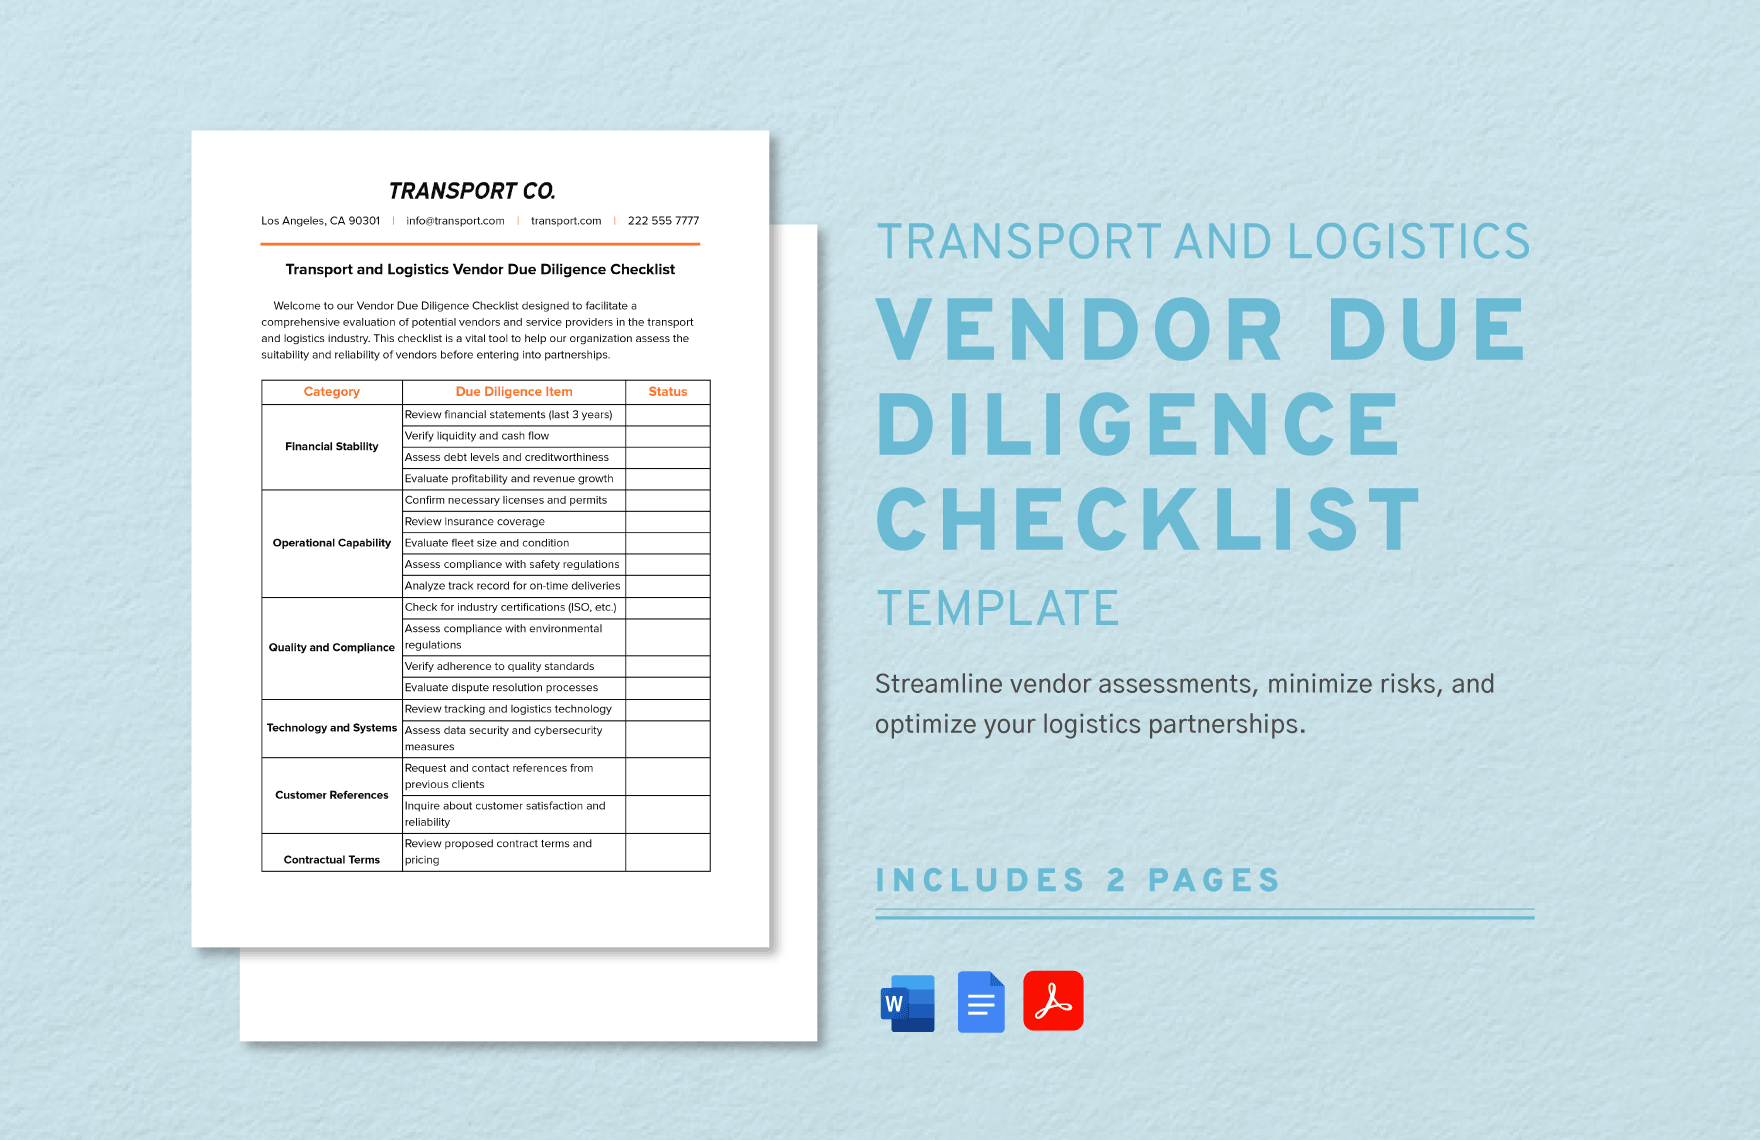 Transport and Logistics Vendor Due Diligence Checklist Template